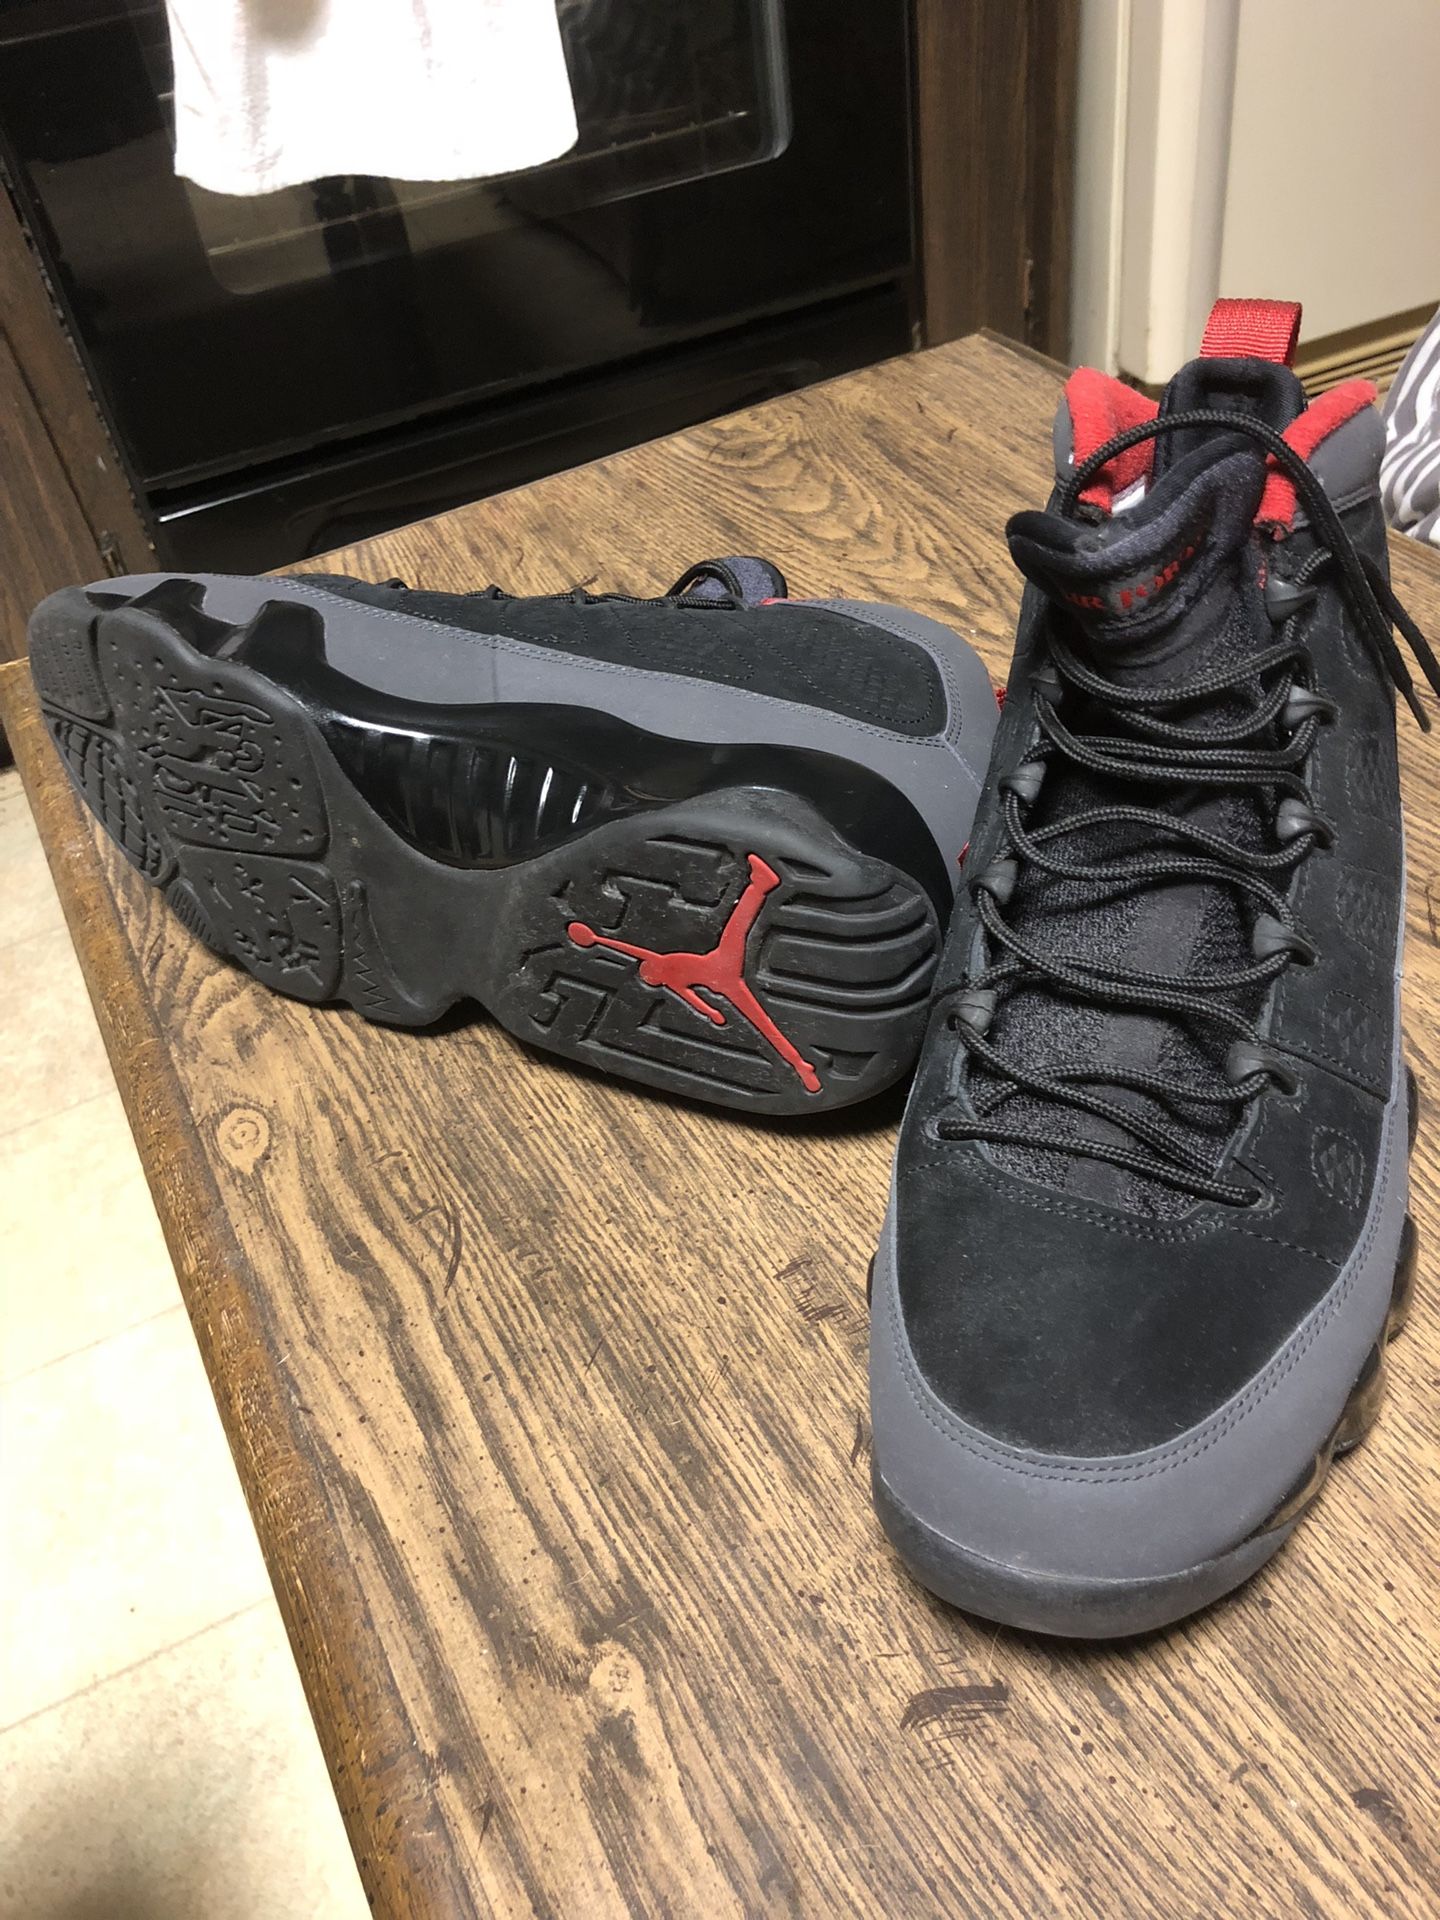 Air Jordan retro charcoal 9’s